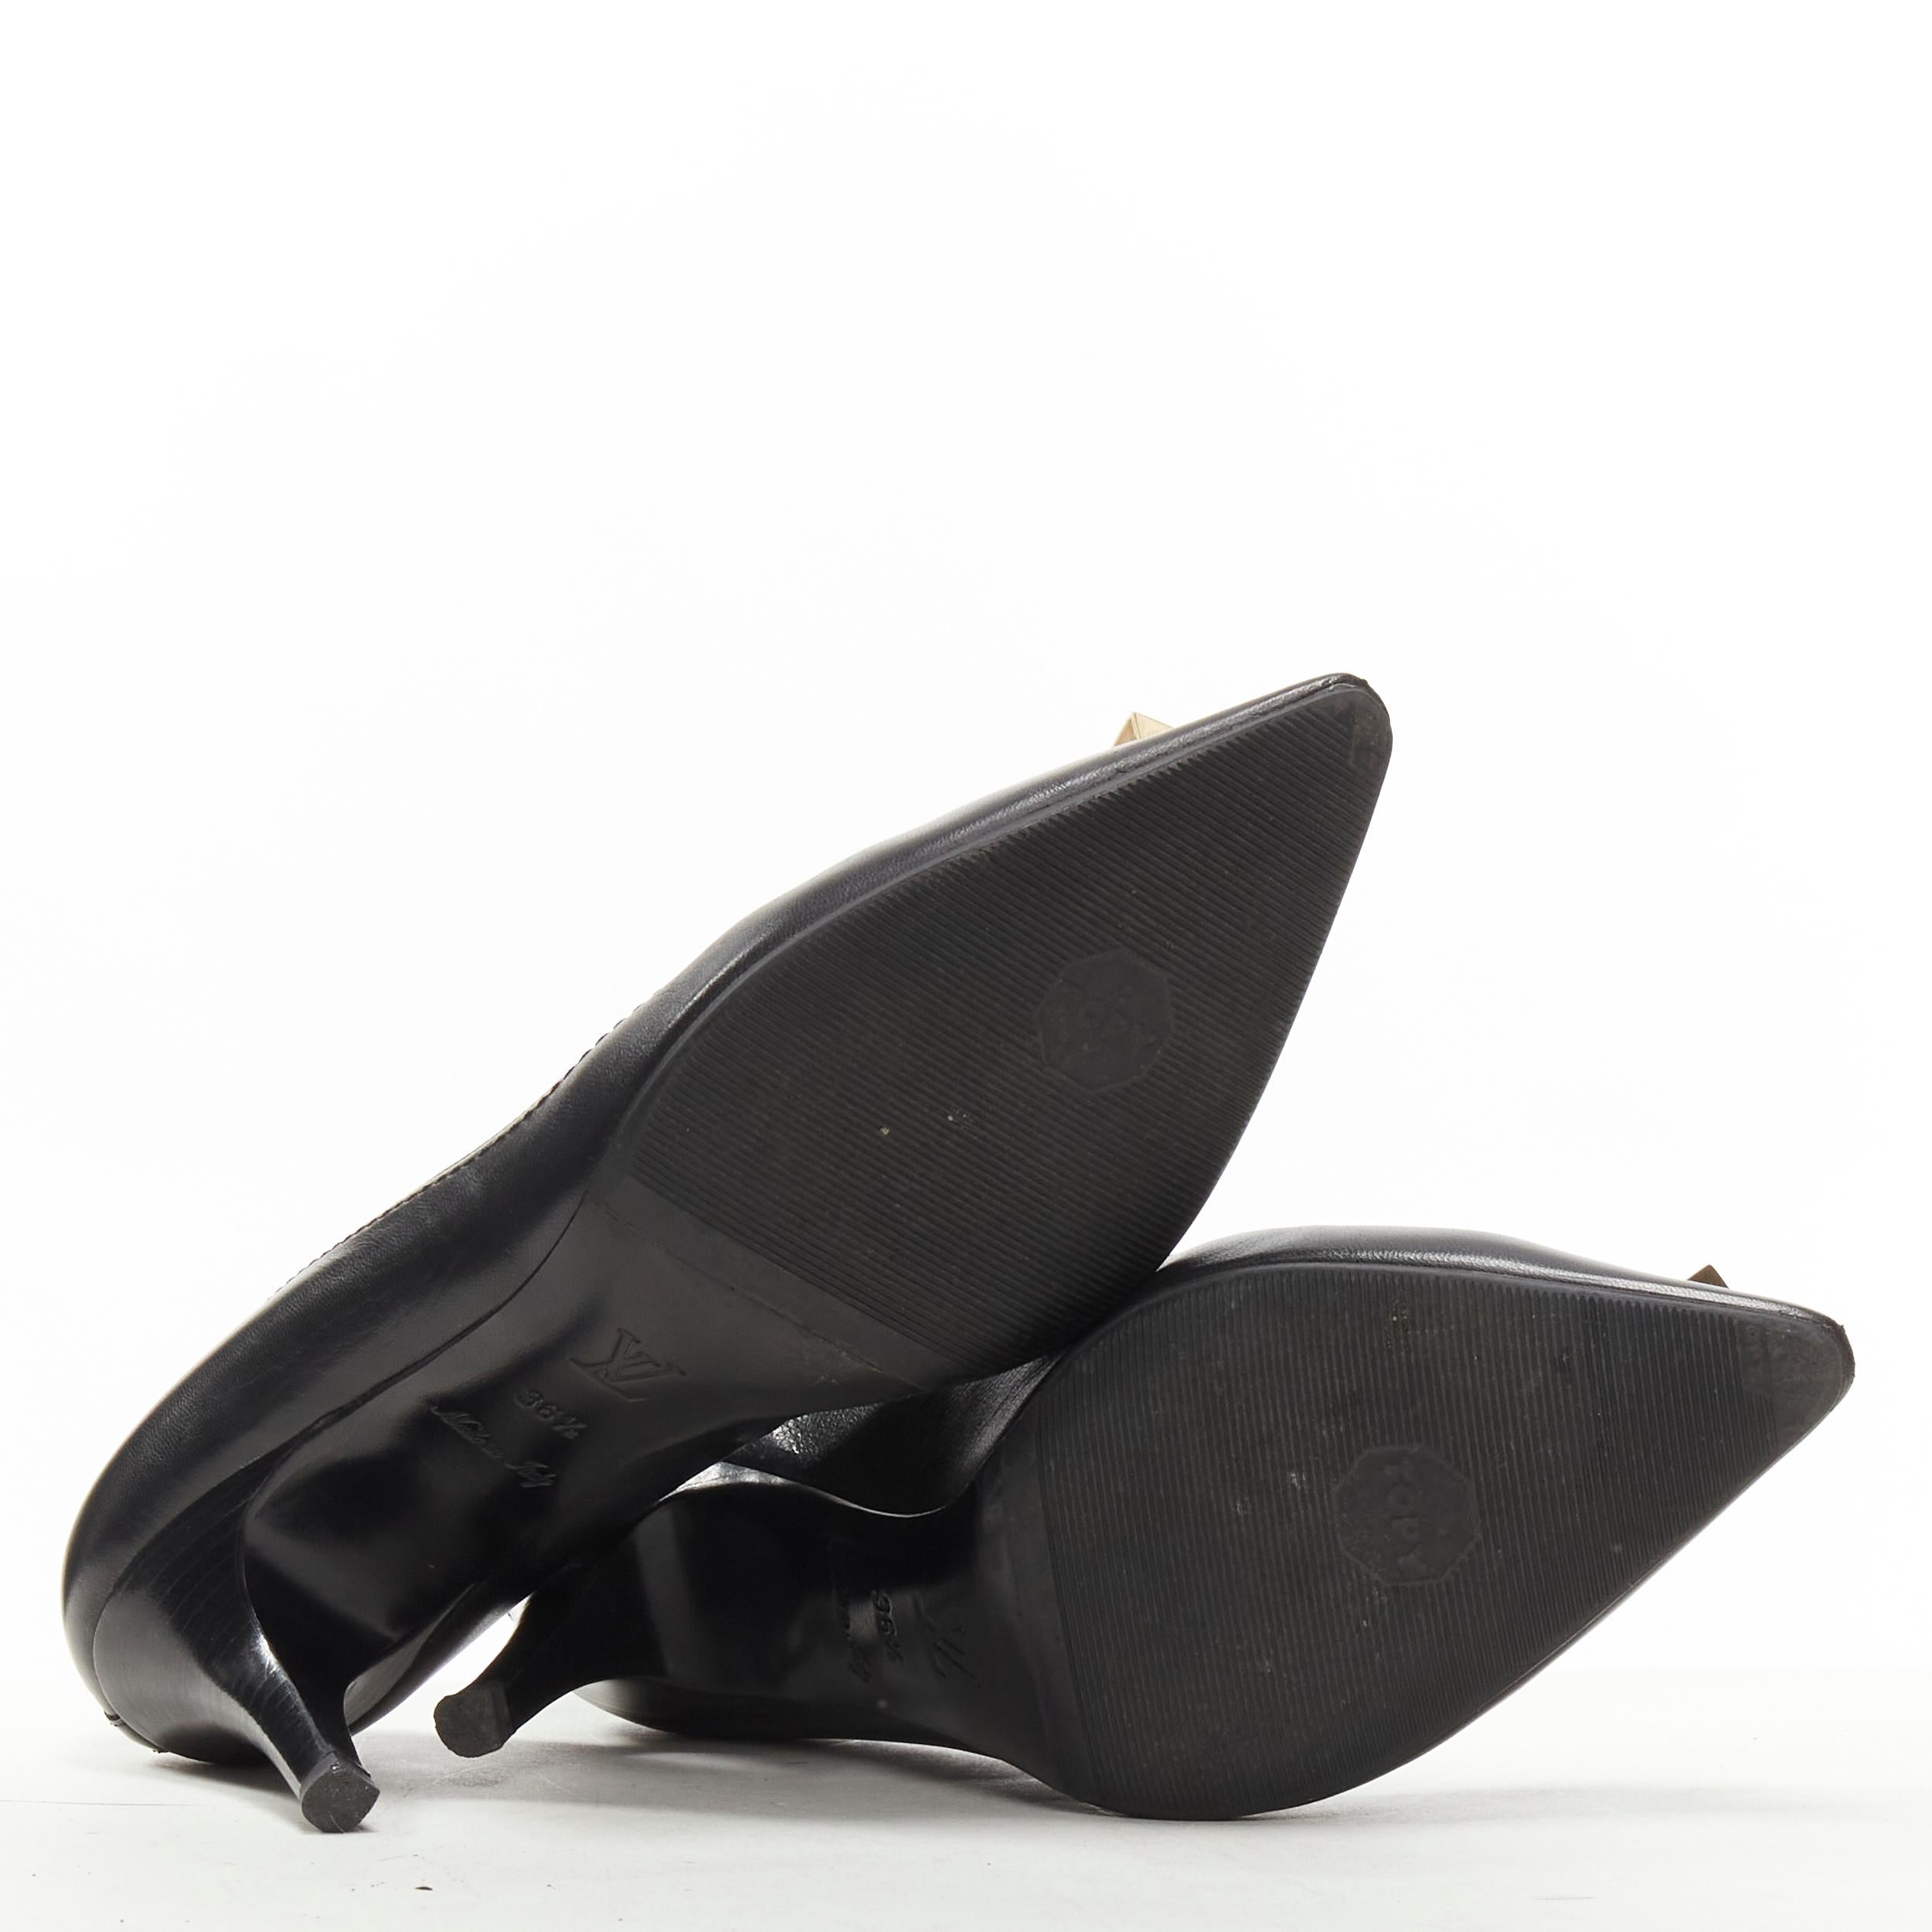 LOUIS VUITTON gold LV dice charm black leather mid heel pump EU36.5 For Sale 5